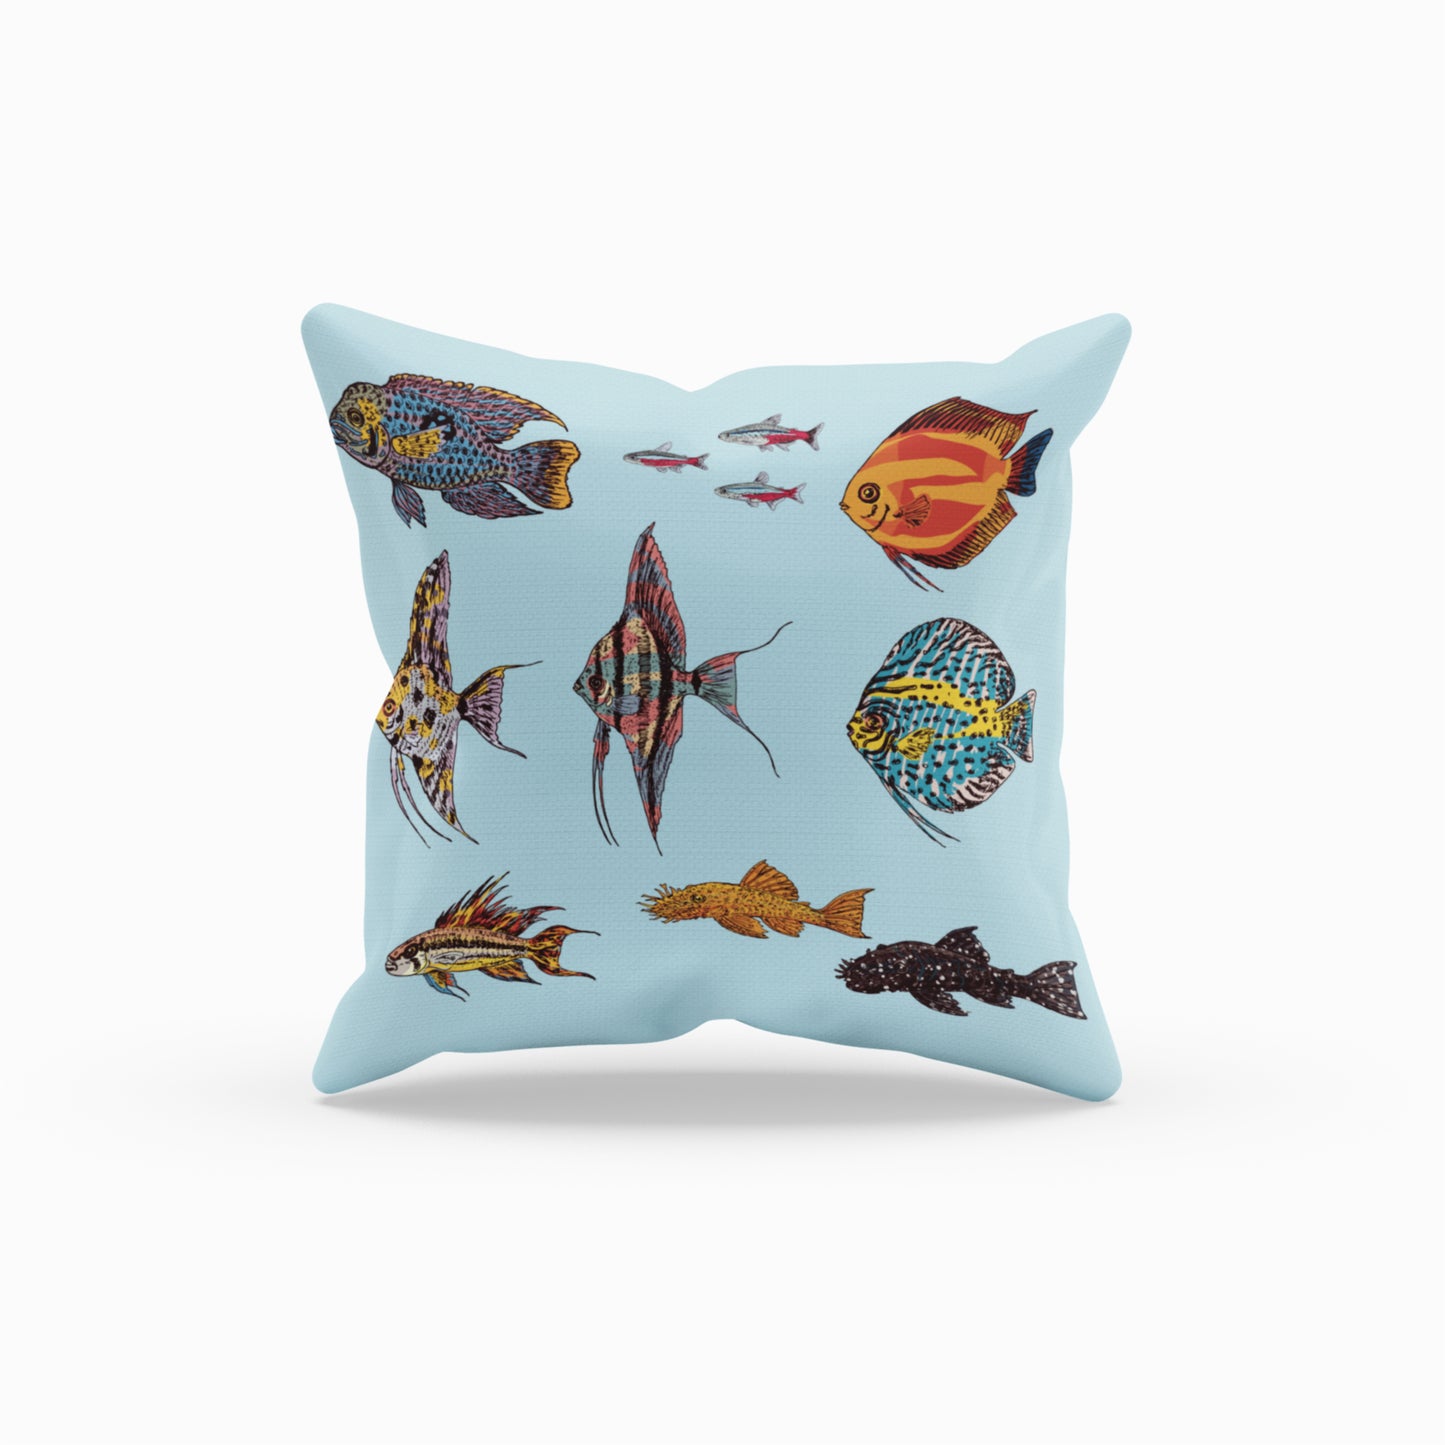 Underwater-themed Decorative Cushion